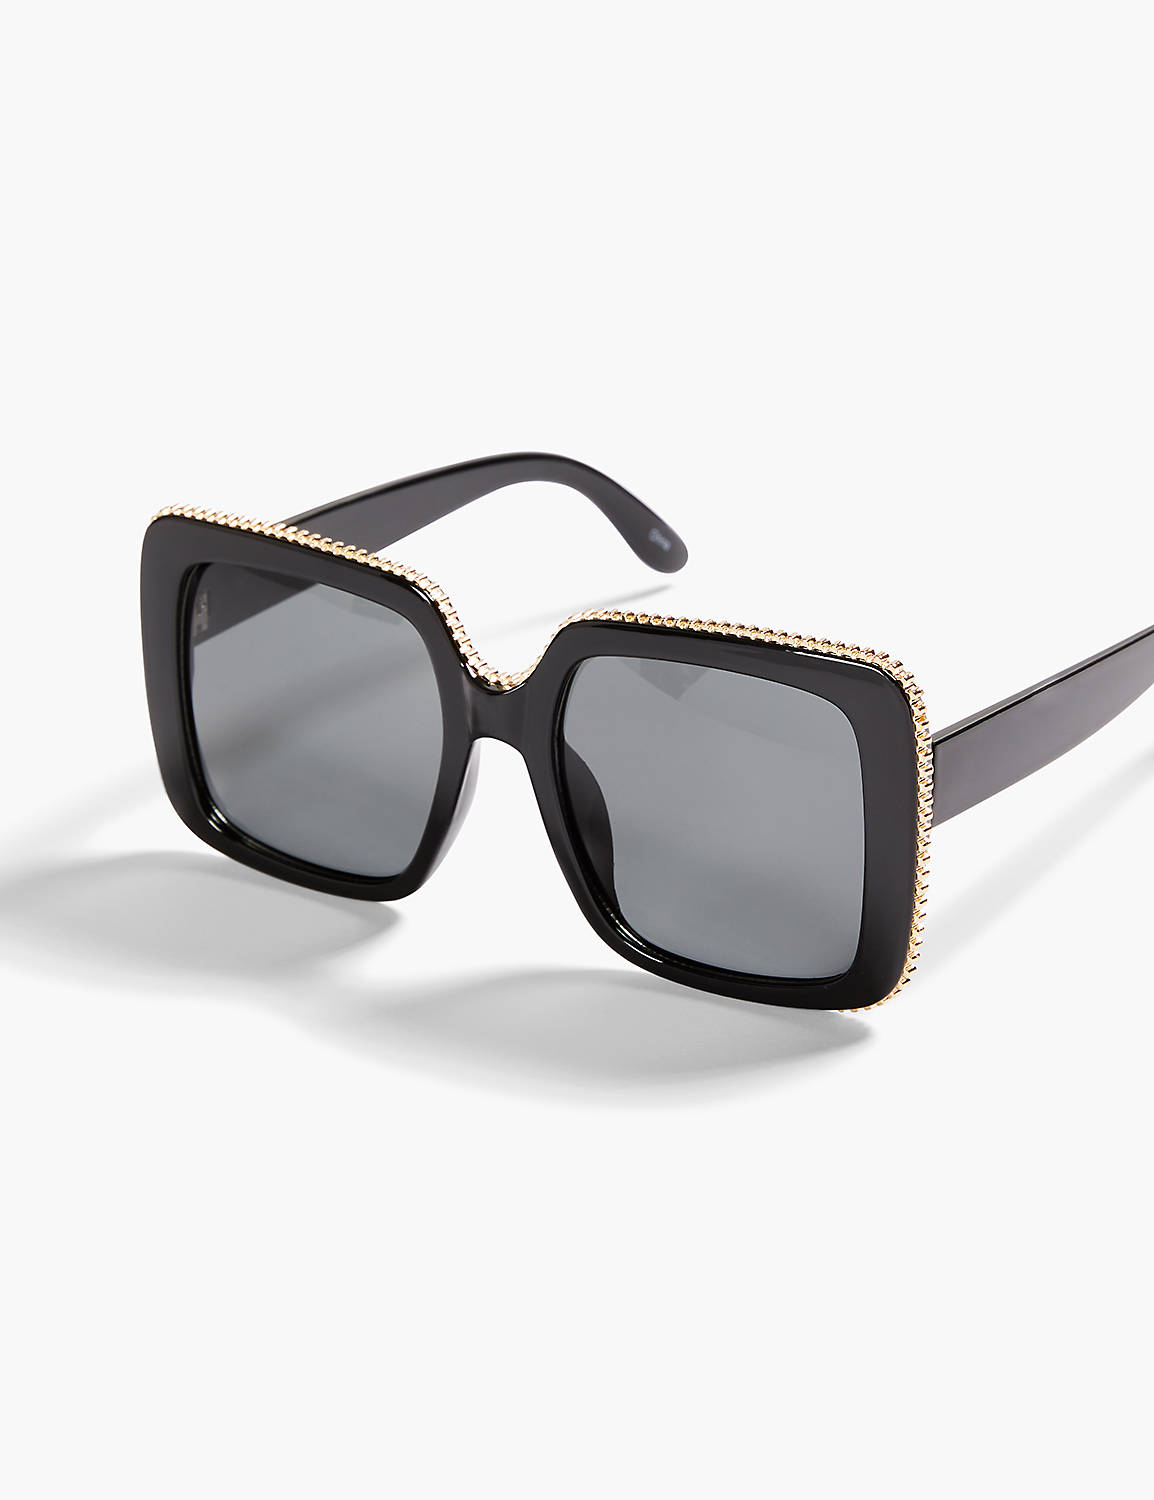 Oversized Square Sunglasses With Gold Embellishment Product Image 1